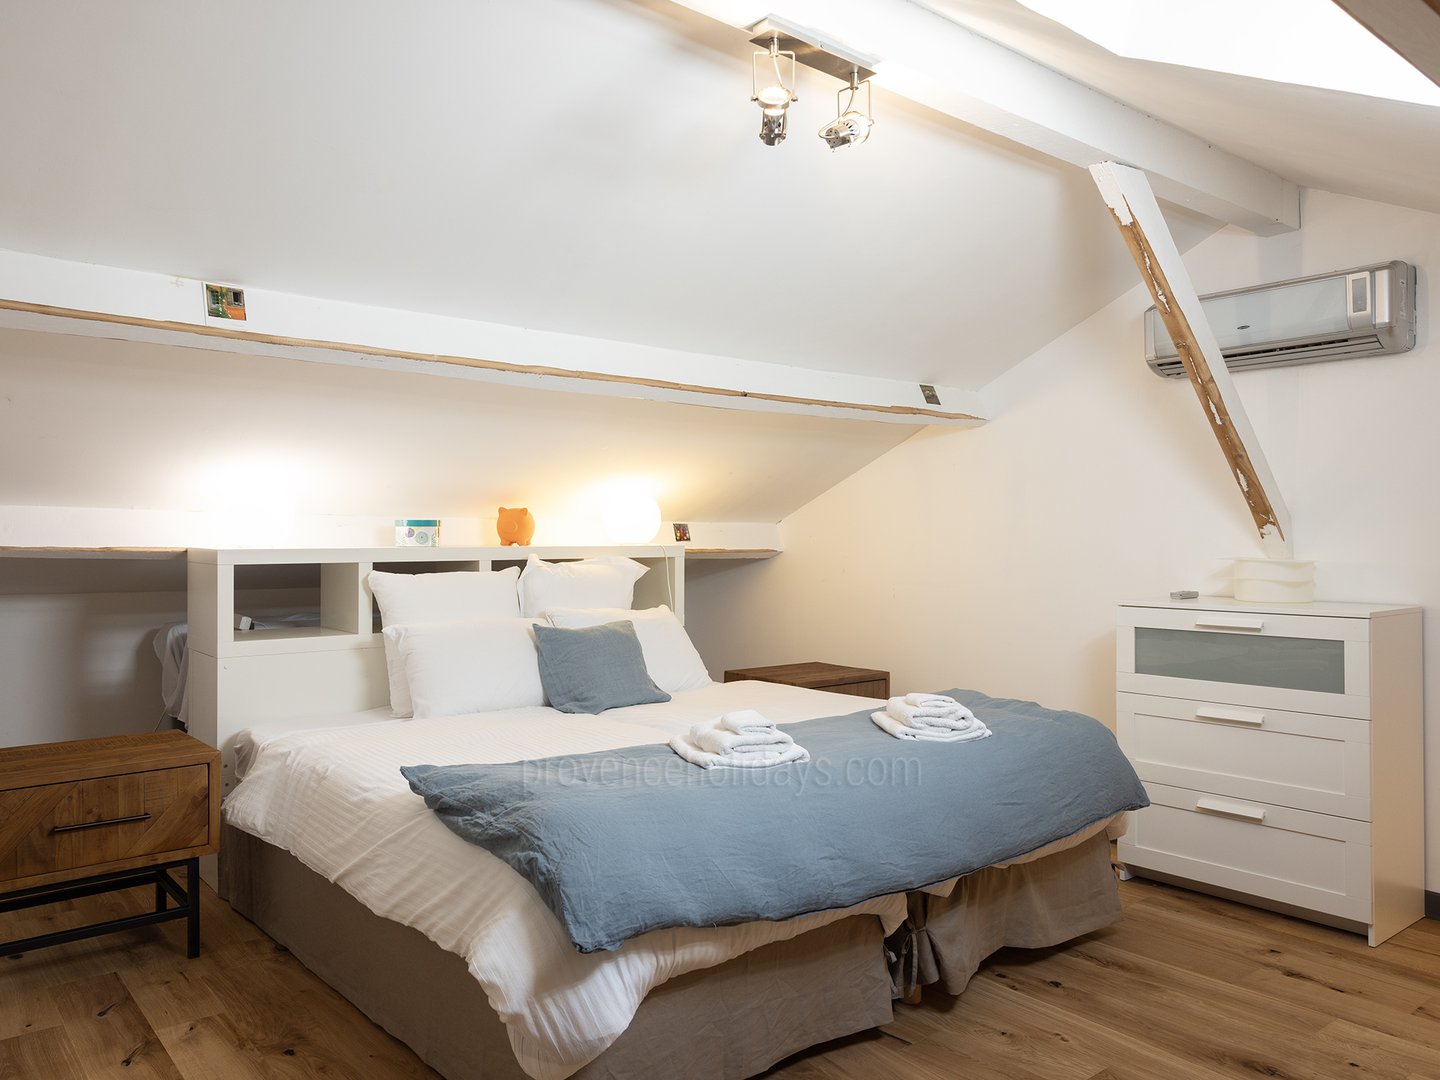 31 - La Maison de Village: Villa: Bedroom - Gastenverblijf Slaapkamer 4